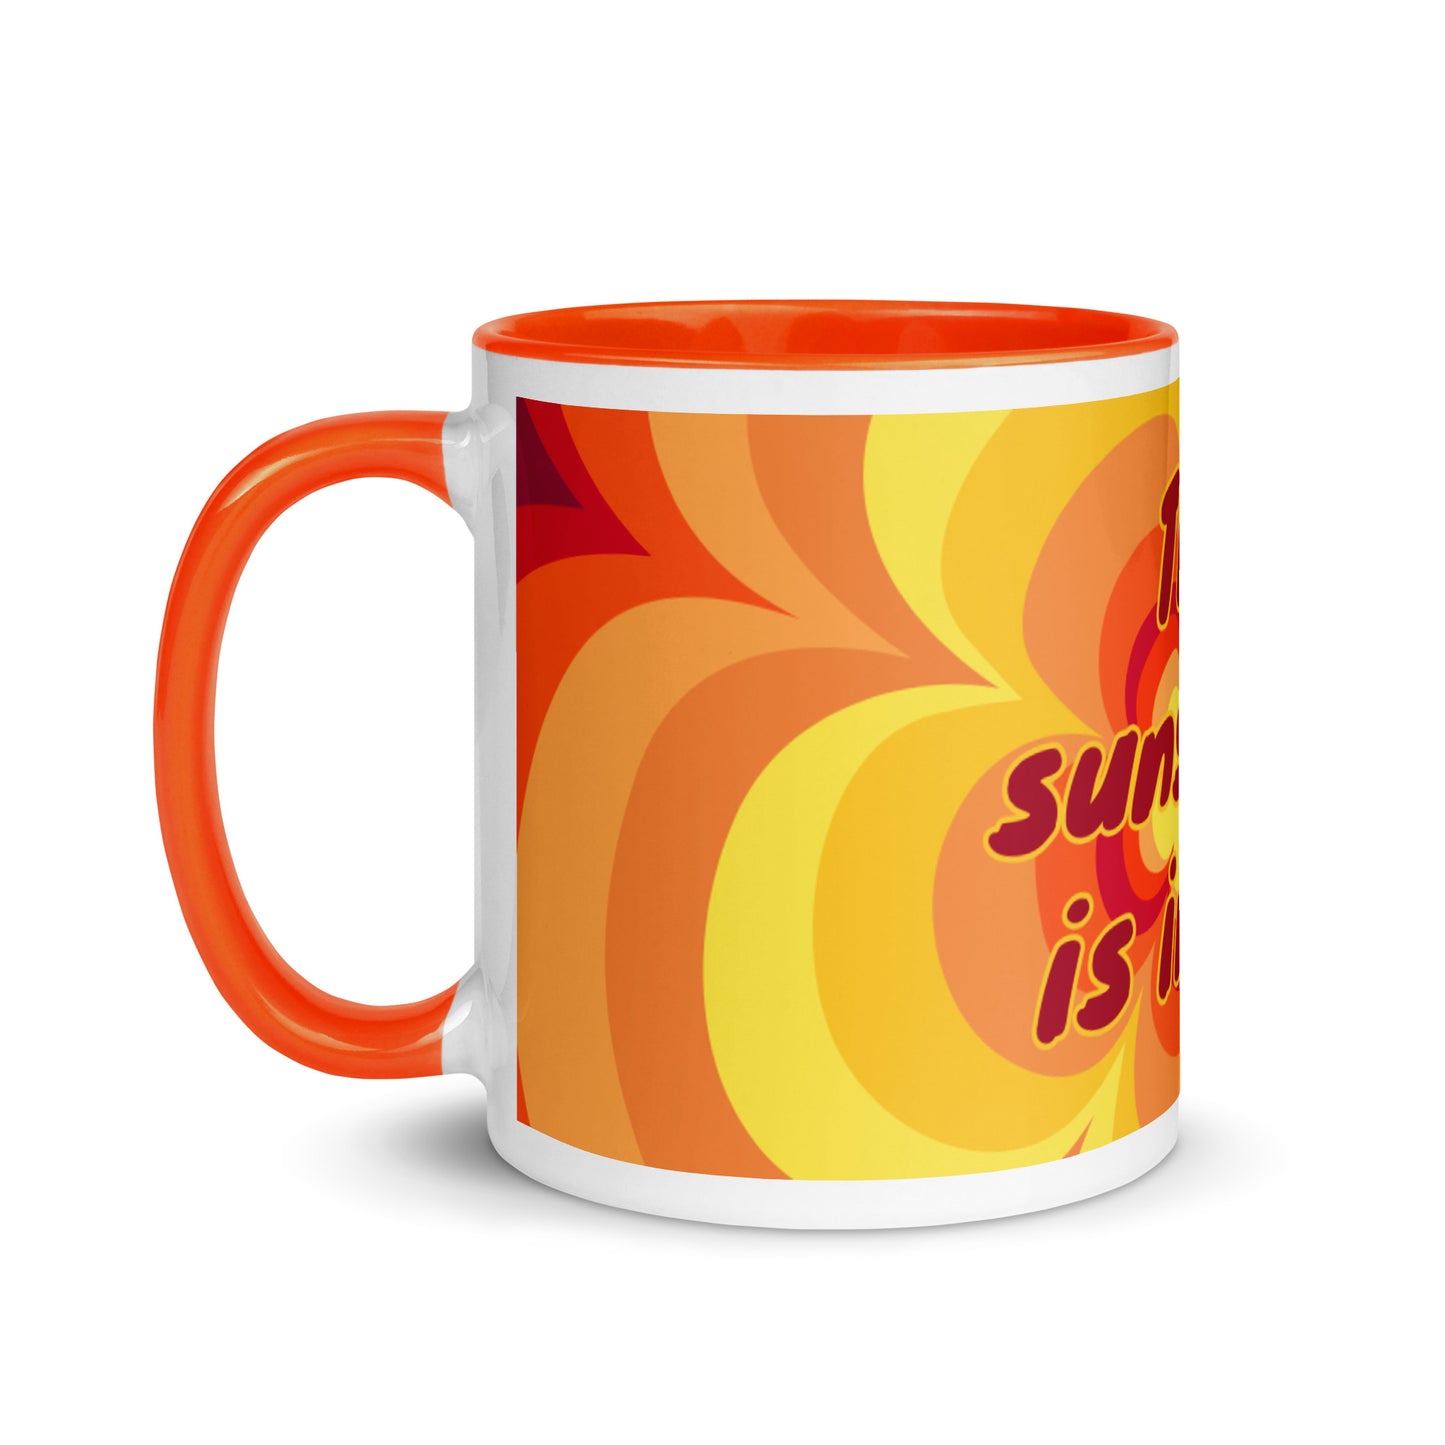 Sunny Flower 2 Color Mug - The sunshine is in me